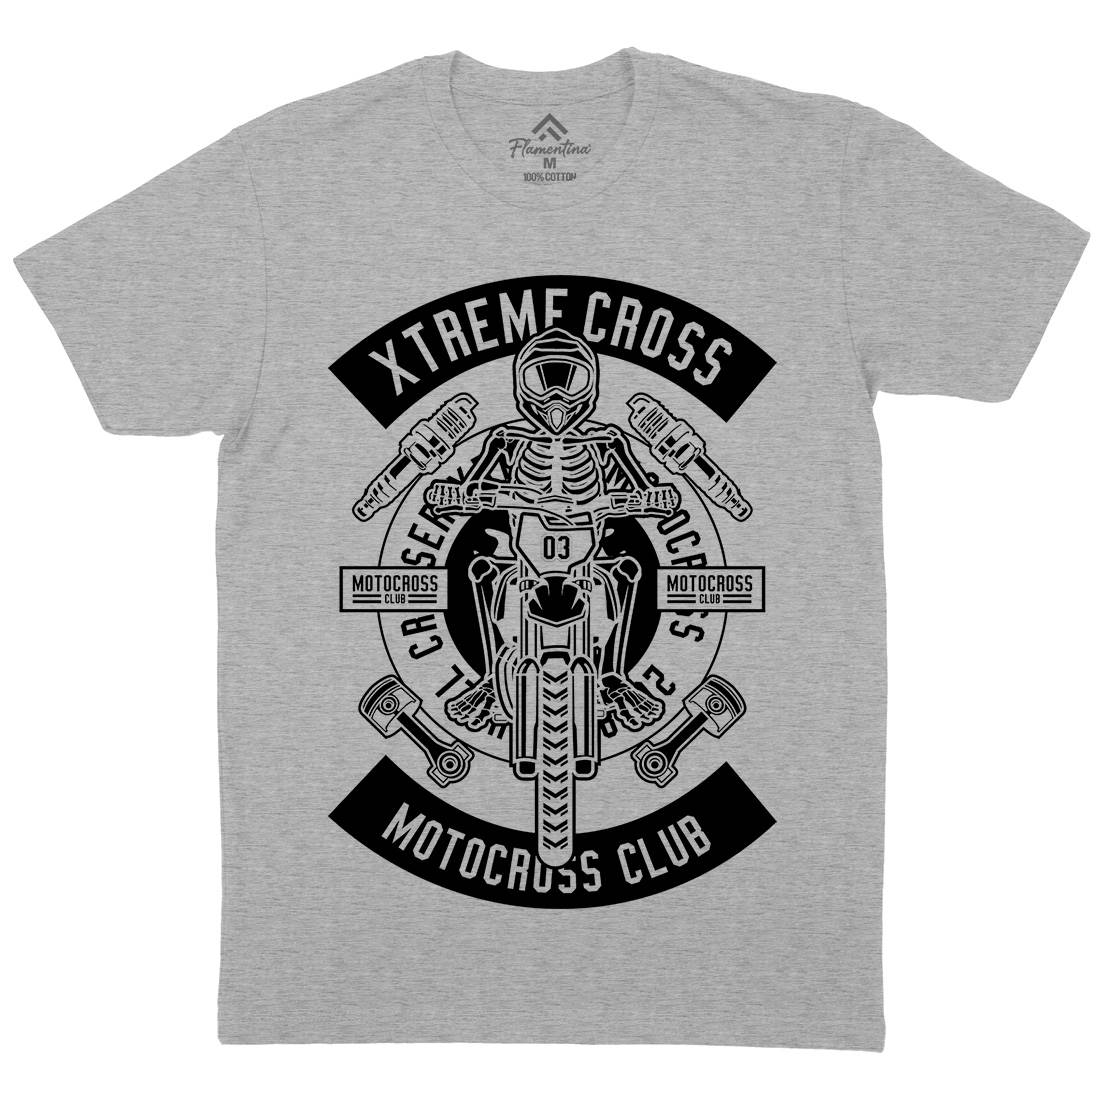 Xtreme Cross Mens Crew Neck T-Shirt Motorcycles B676